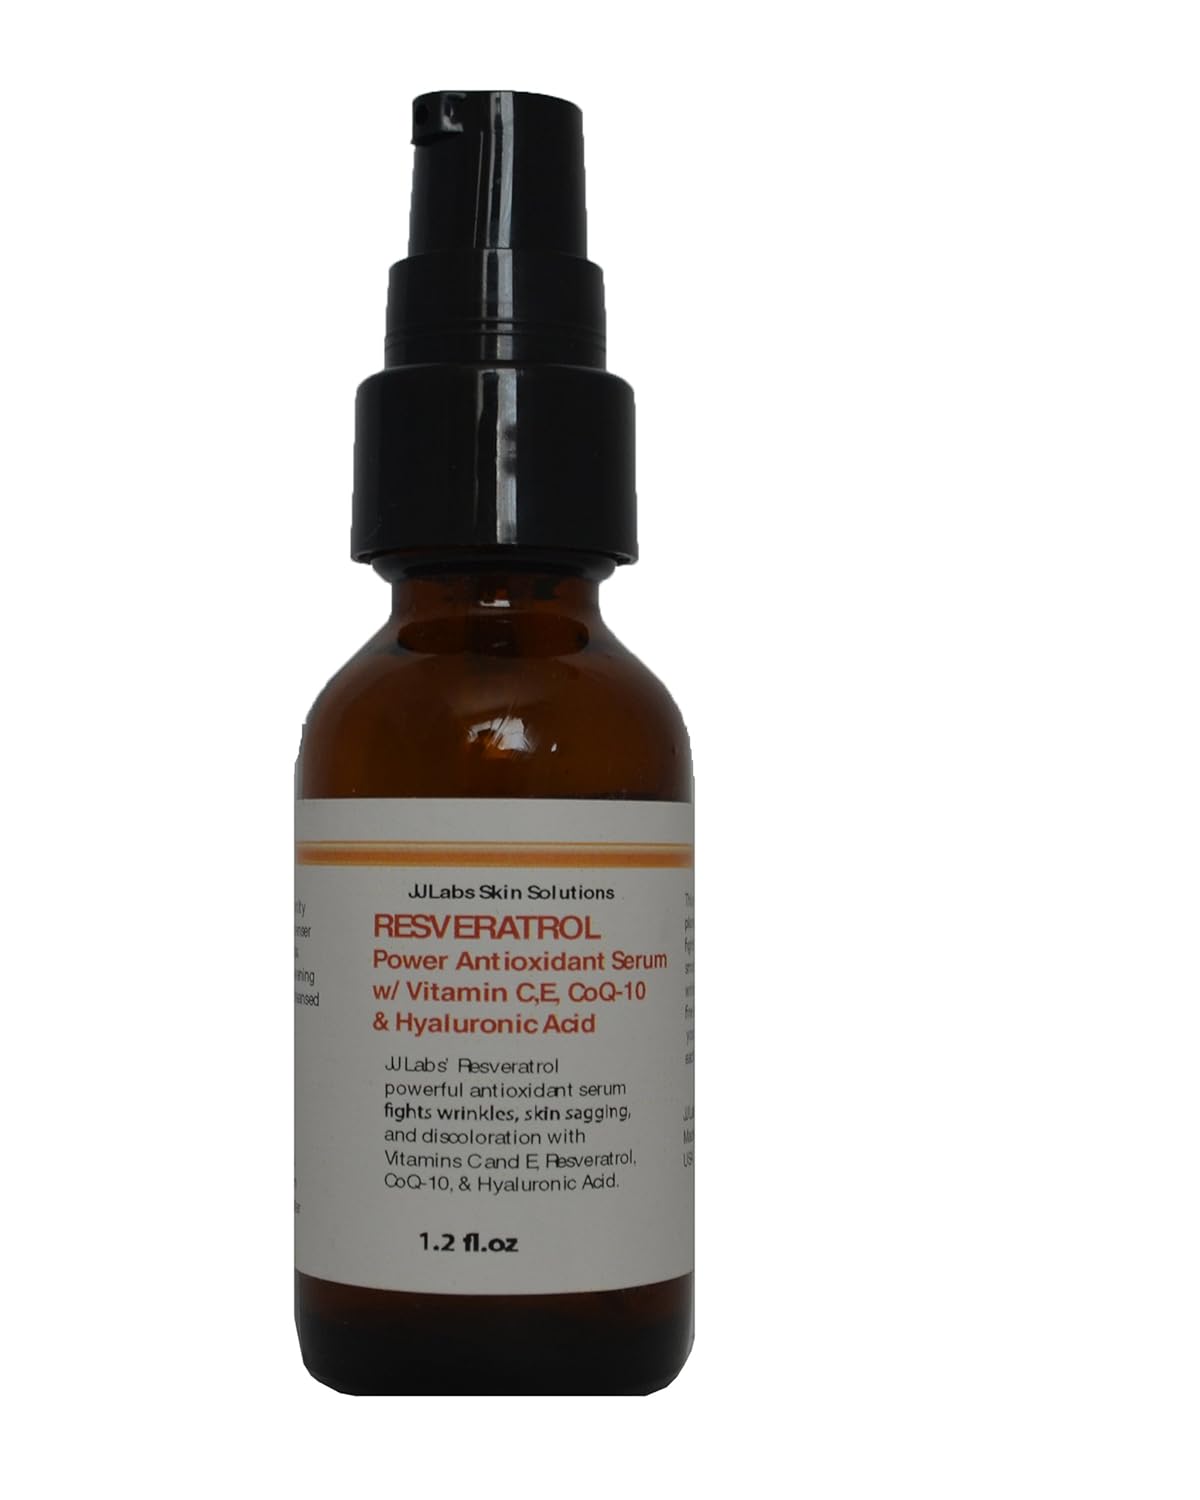 Resveratrol Antioxidant serum with Vitamins C and E, CoQ-10,Collagen, Aloe Vera, and Pure Hyaluronic Acid (2.3 fl.oz)